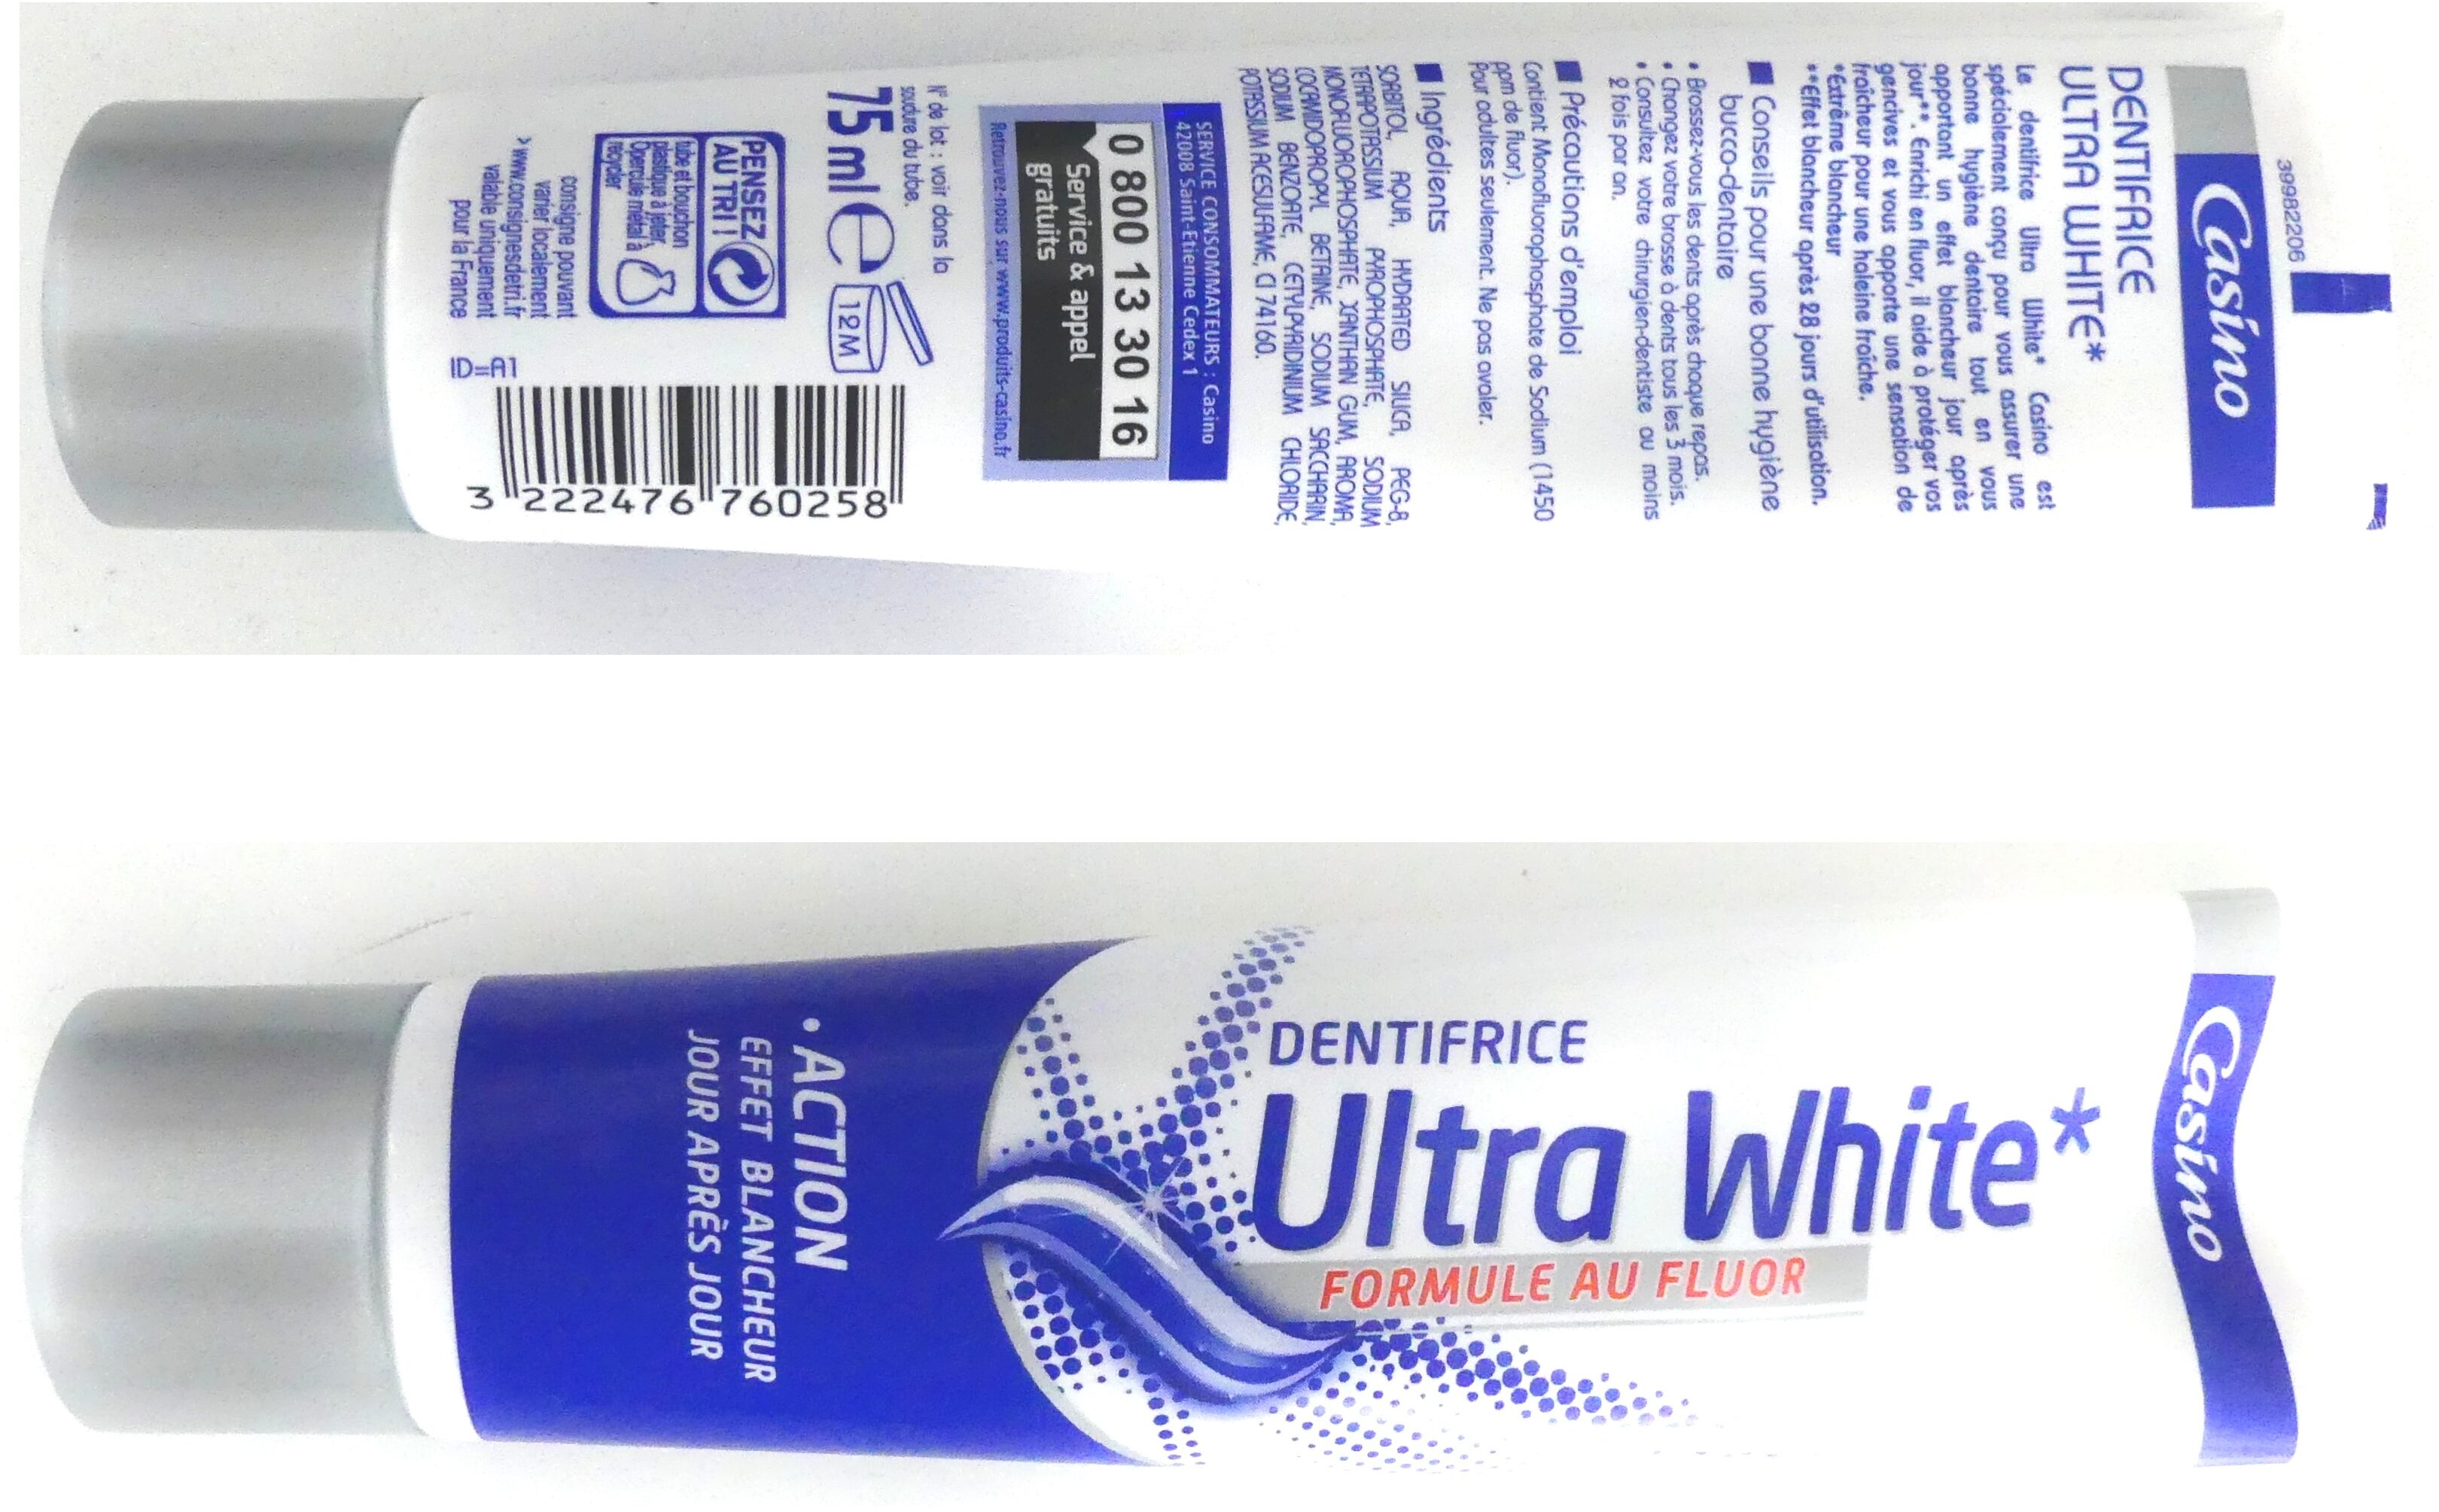 Dentifrice ultra white - Produto - fr